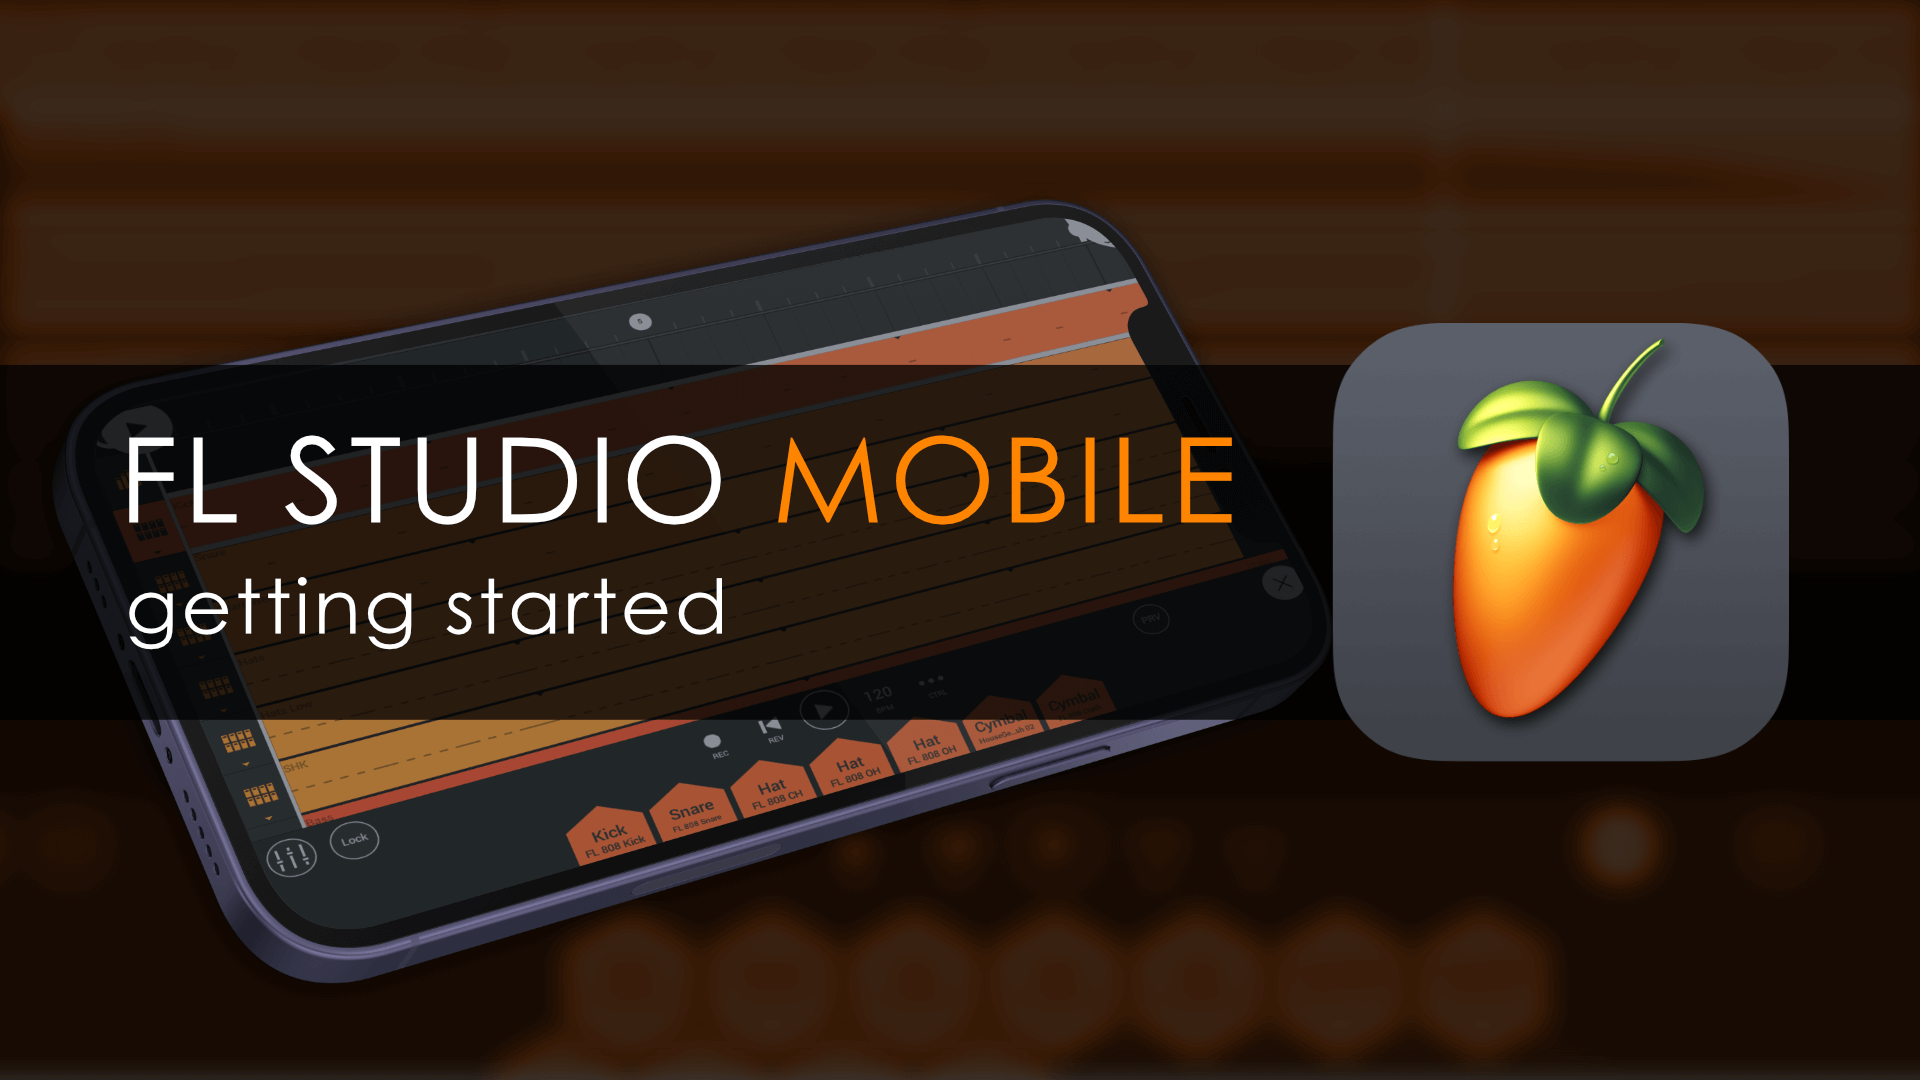 FL STUDIO MOBILE | Getting Started - FL Studio